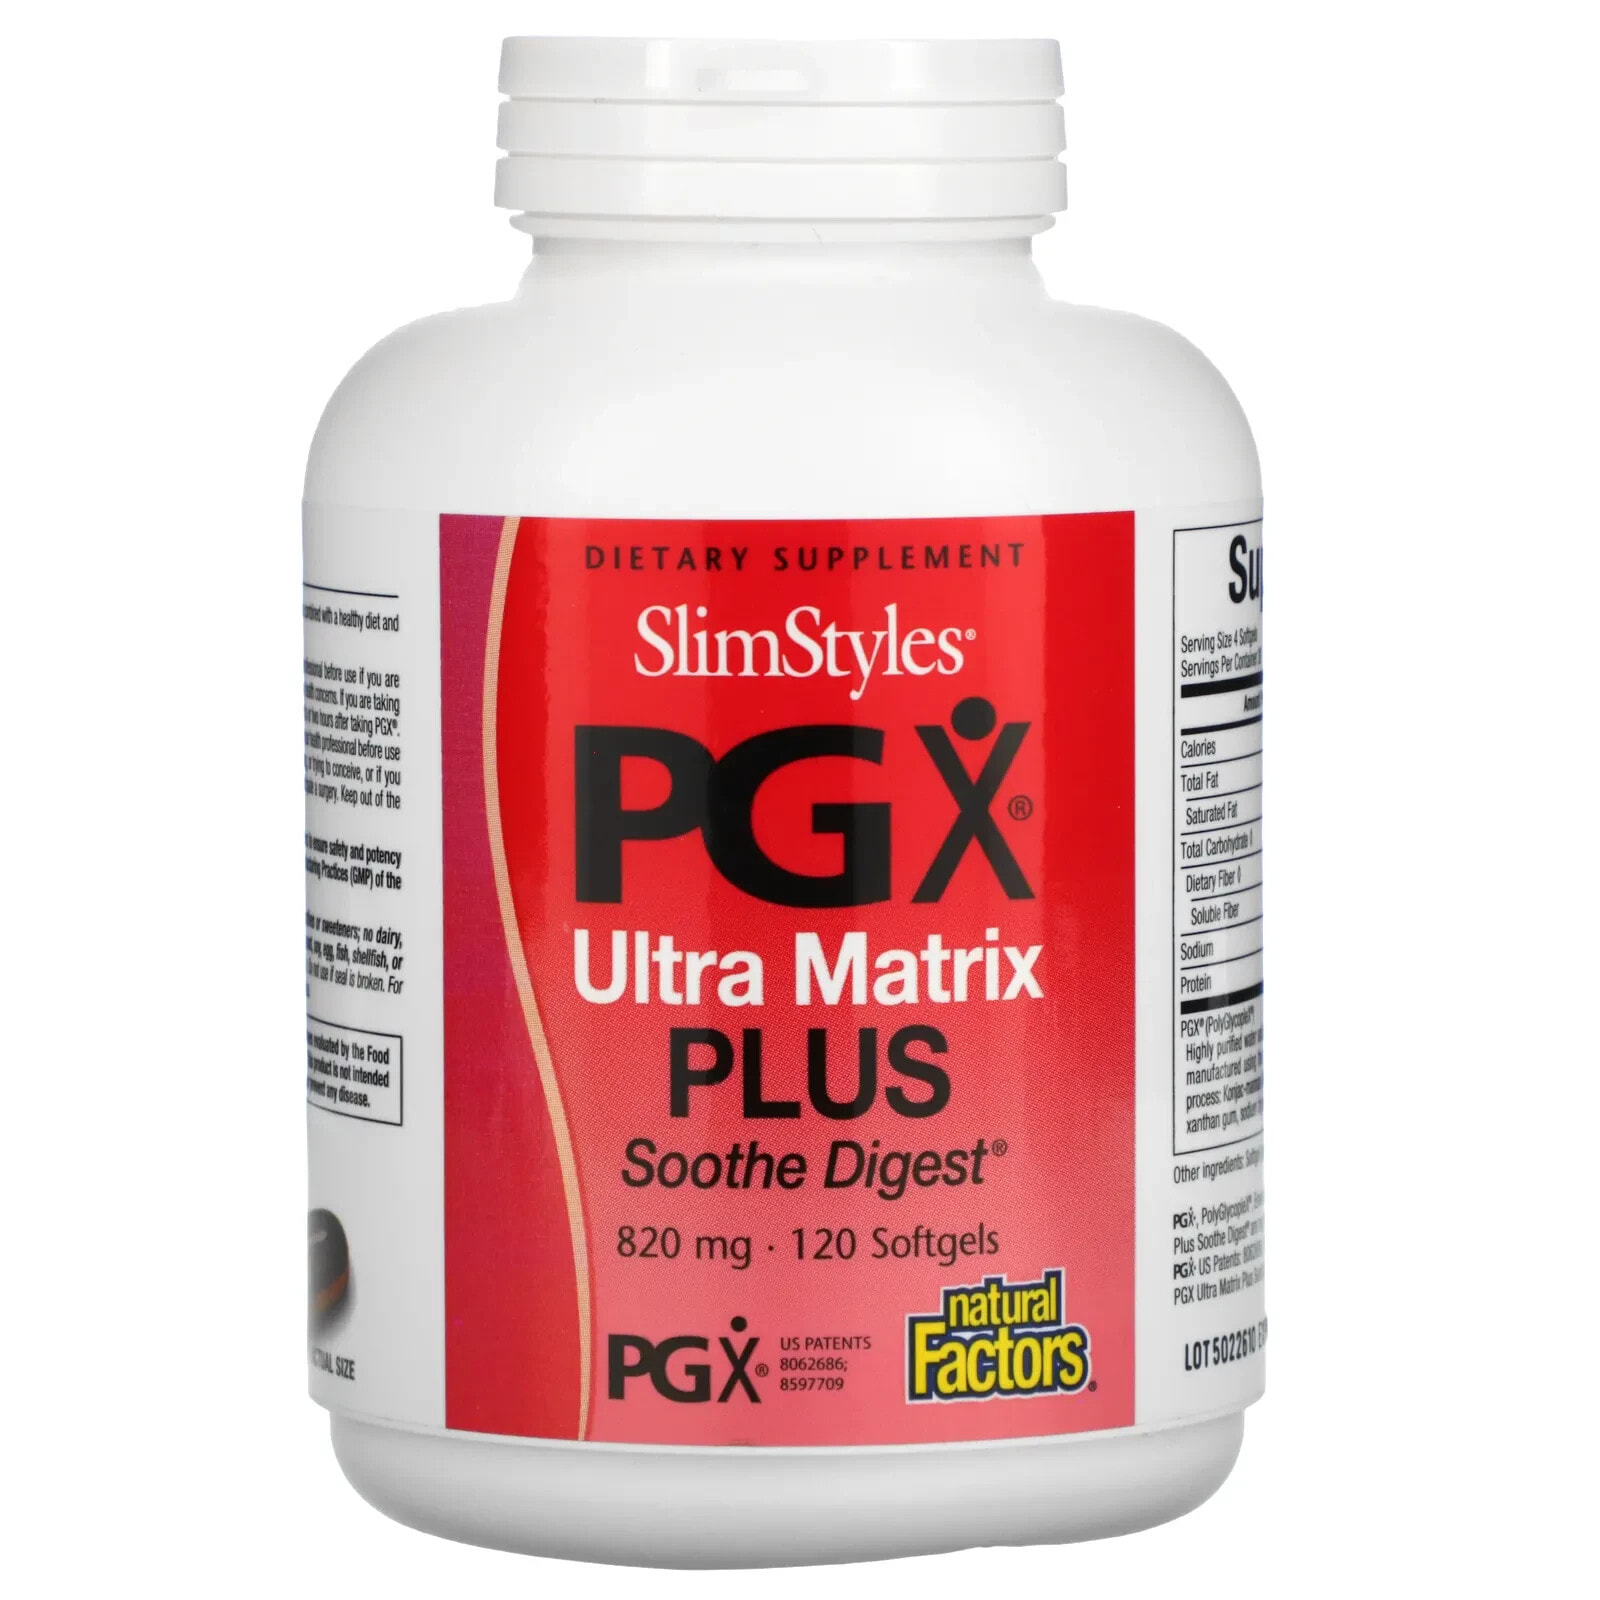 SlimStyles, PG X Ultra Matrix Plus Soothe Digest, 120 Softgels